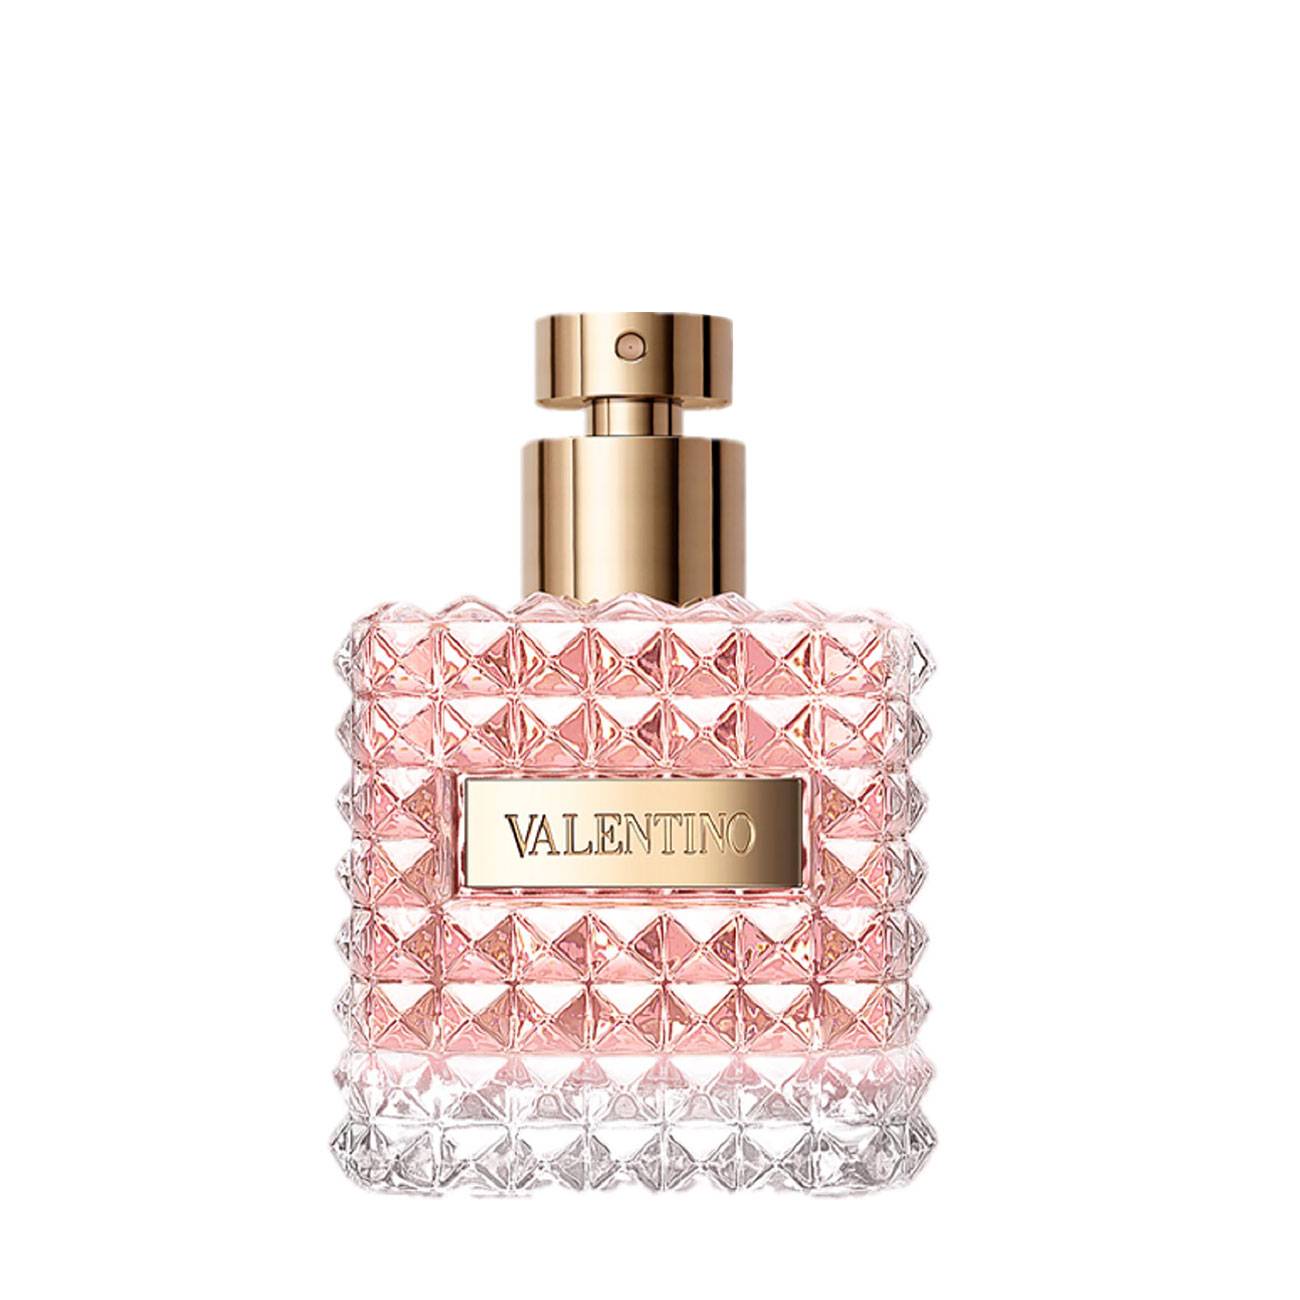 Apa de Parfum Valentino DONNA 50ml cu comanda online